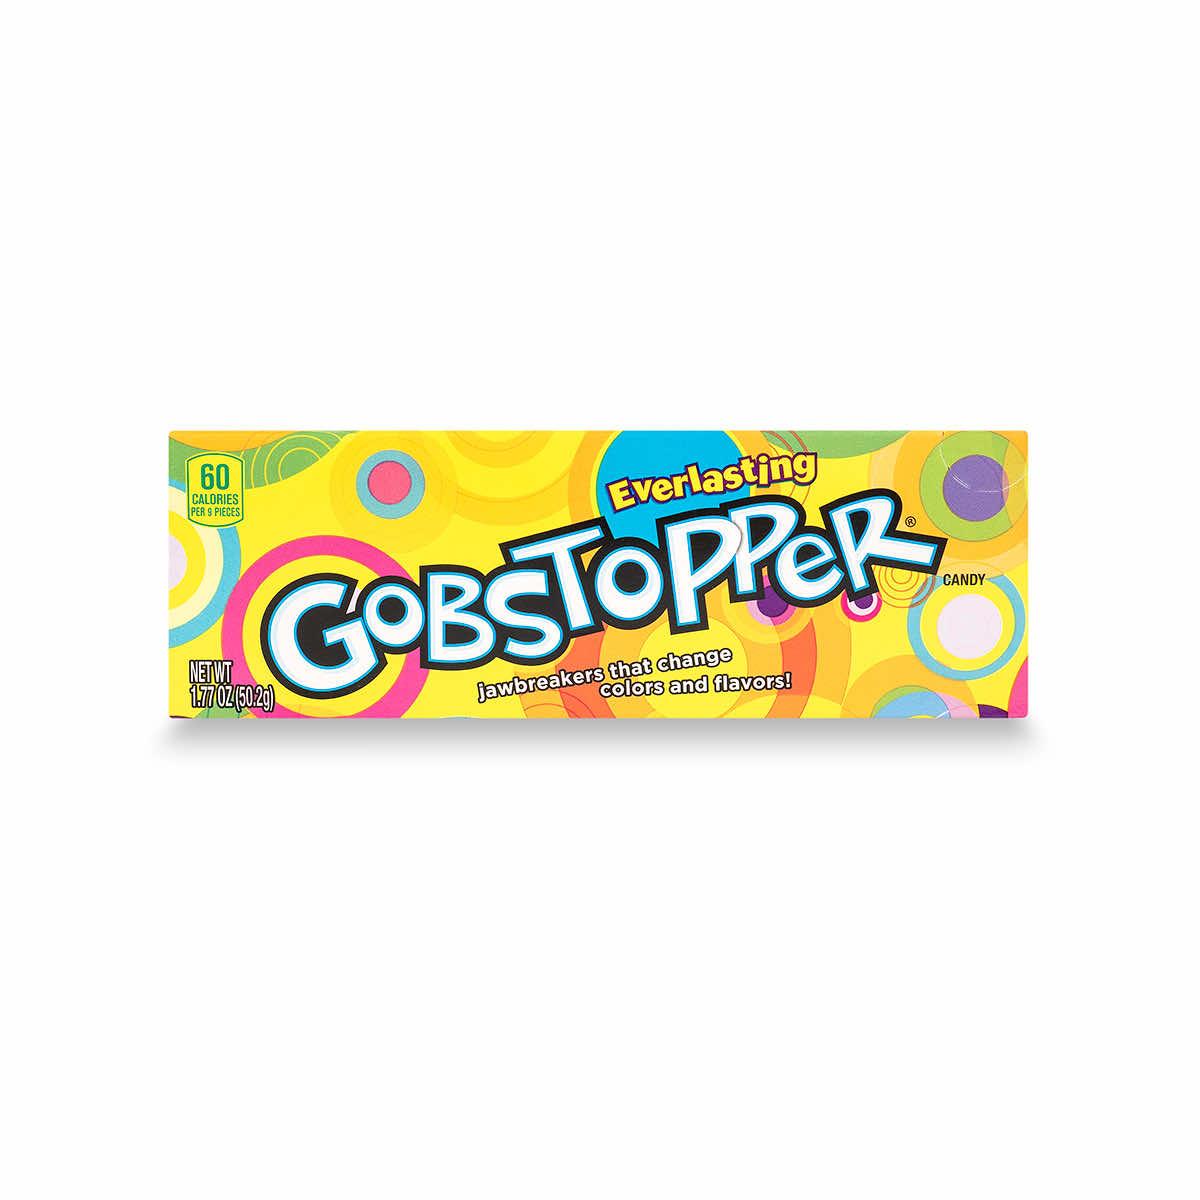  Gobstopper Candy